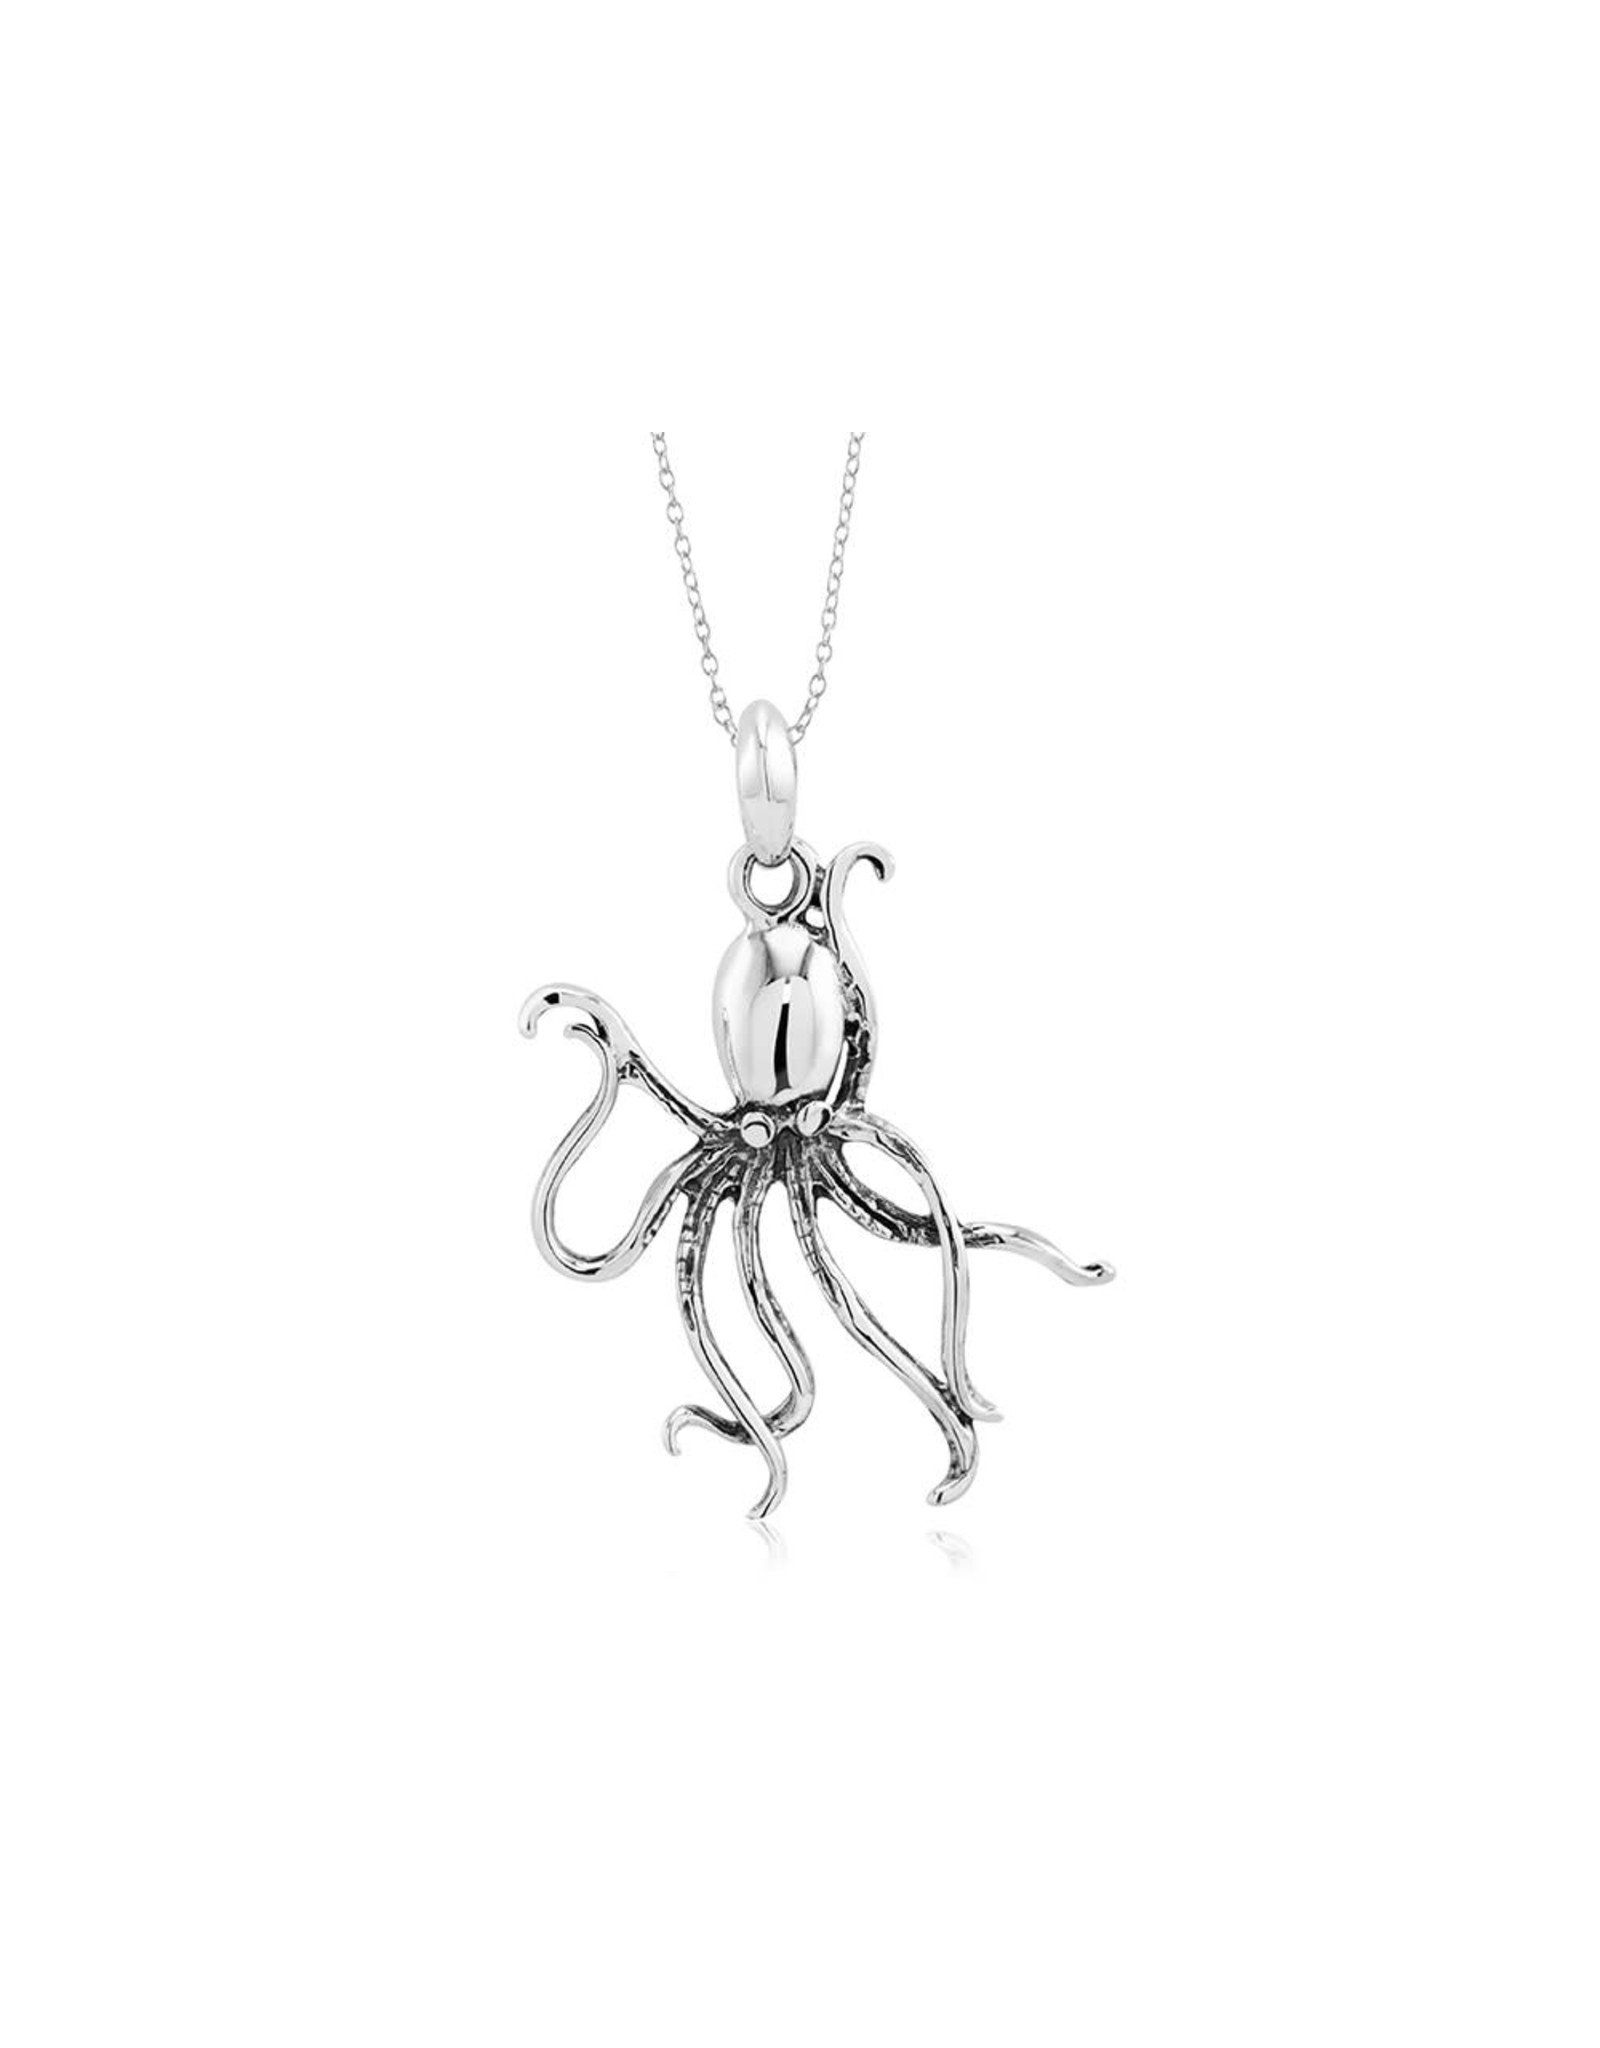 Sterling Octopus Pendant